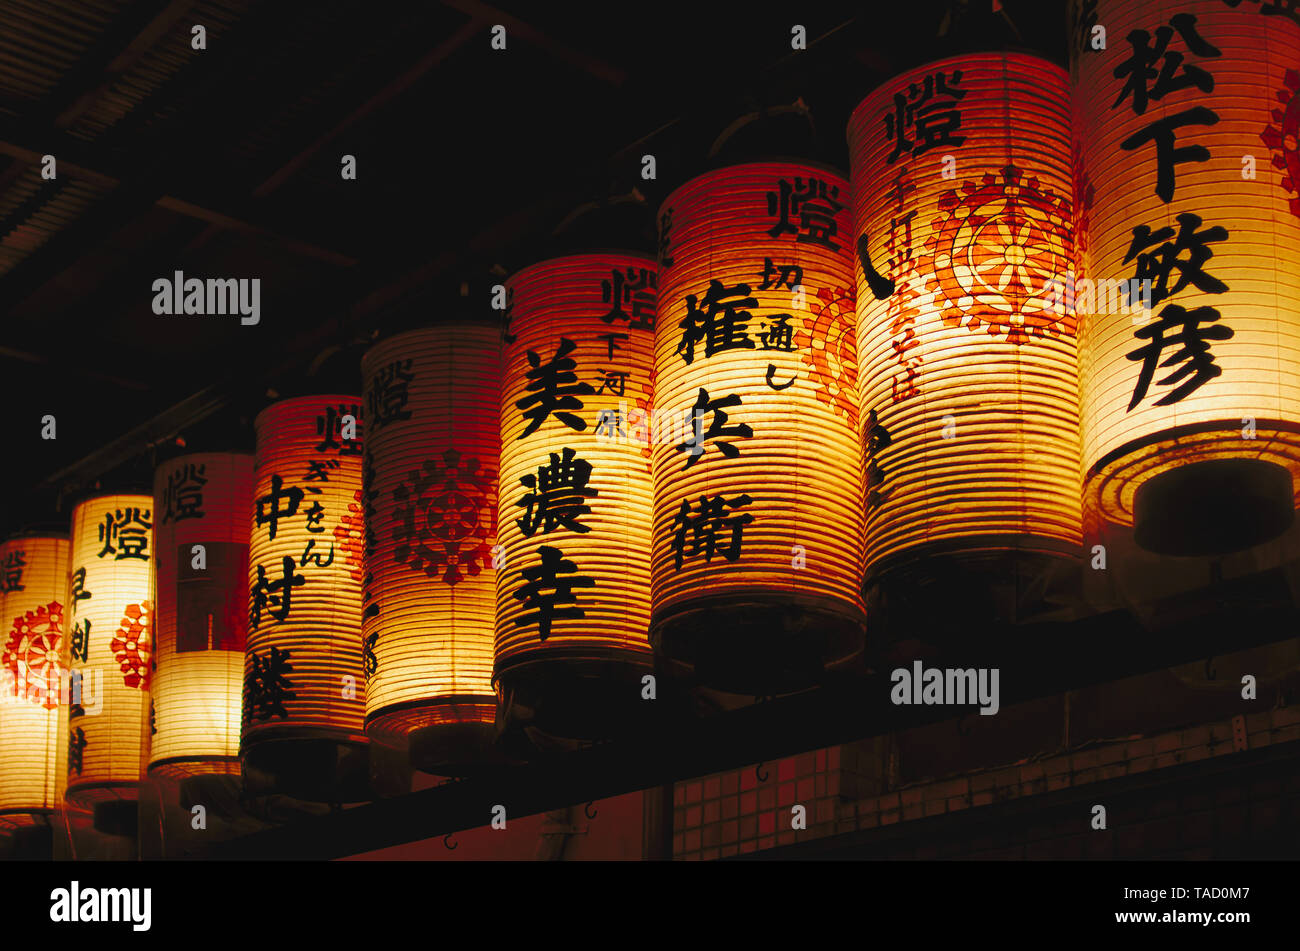 Il chochin è una lanterna o lampada giapponese di origine cinese che  consiste di una più